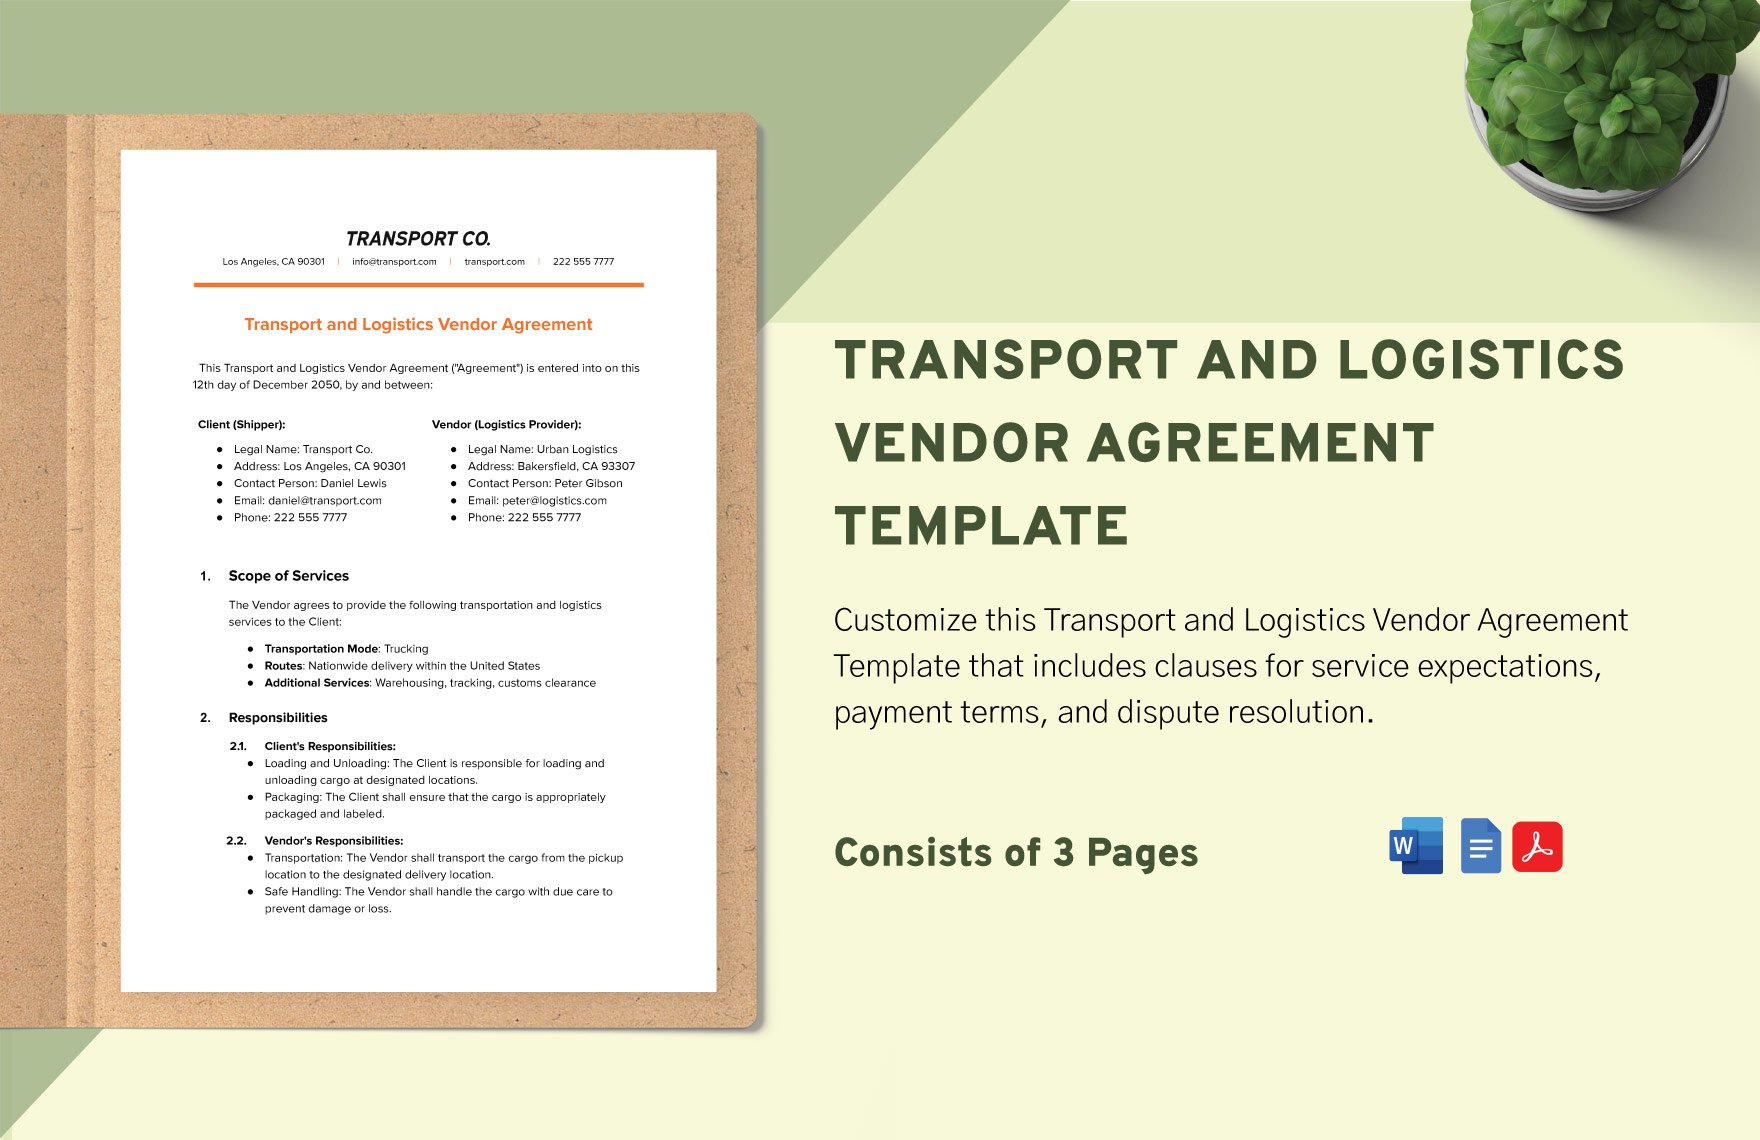 Transport and Logistics Vendor Agreement Template in Word, Google Docs, PDF